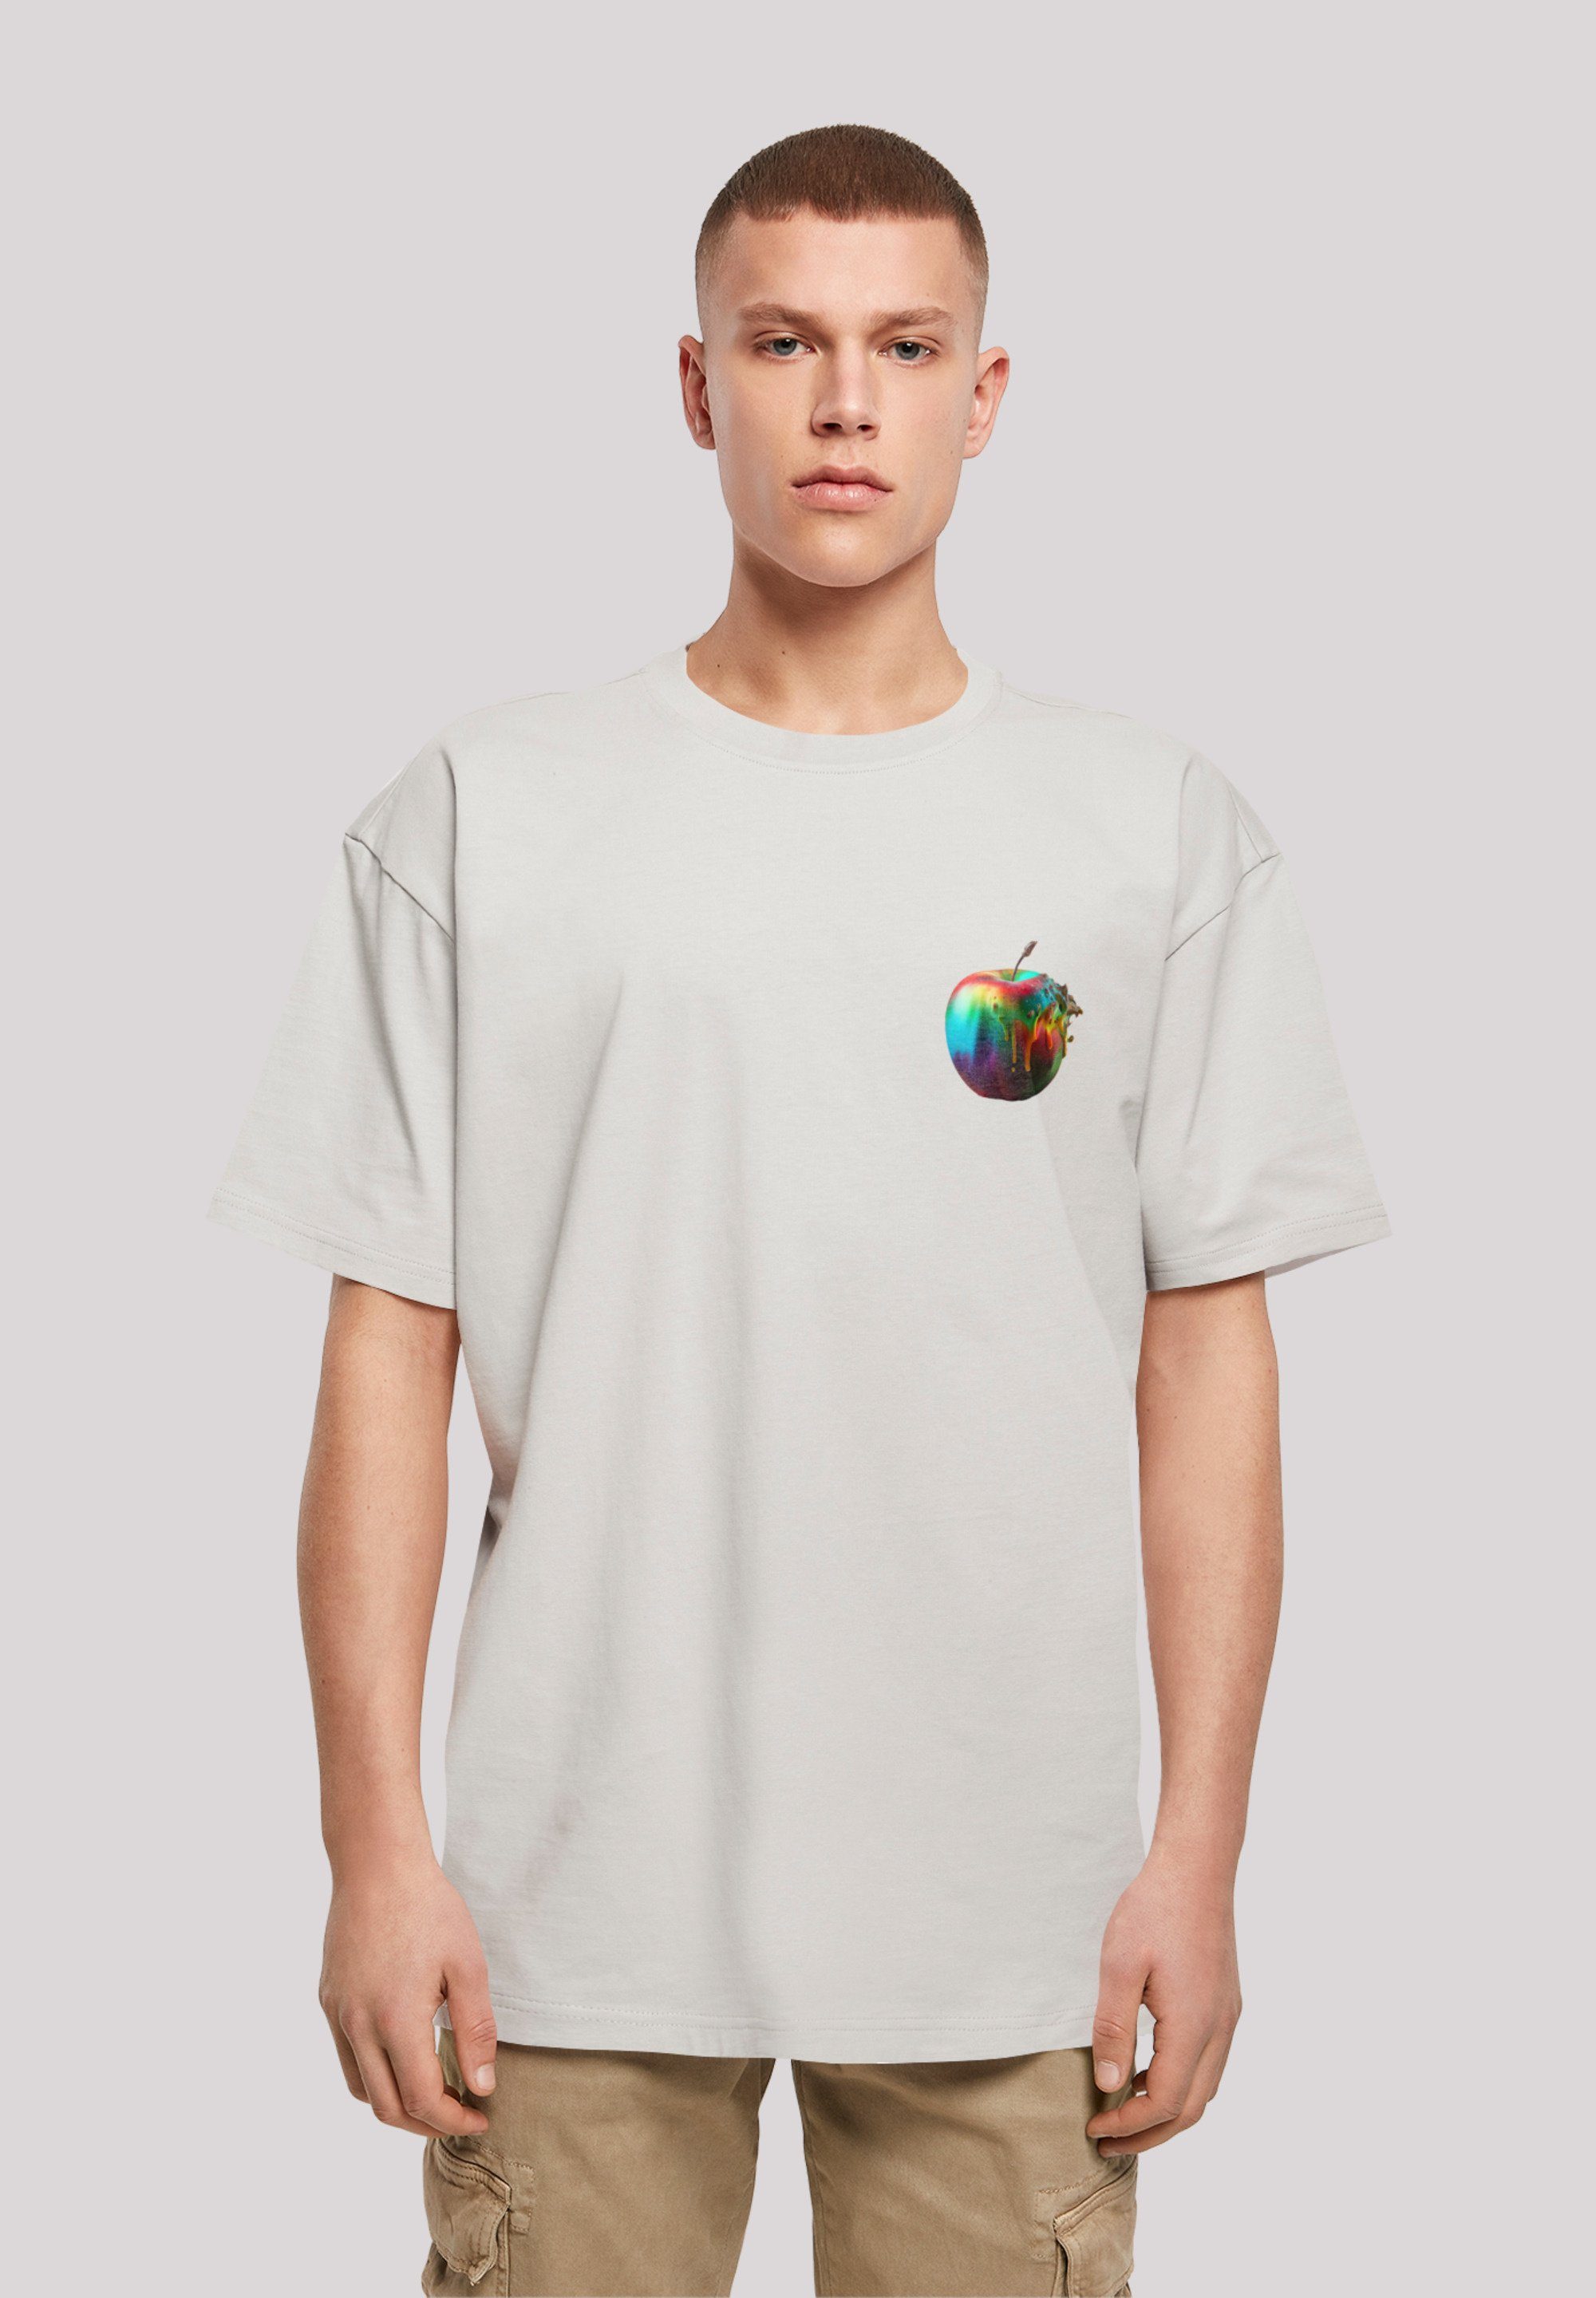 F4NT4STIC T-Shirt Colorfood Collection Apple lightasphalt - Rainbow Print